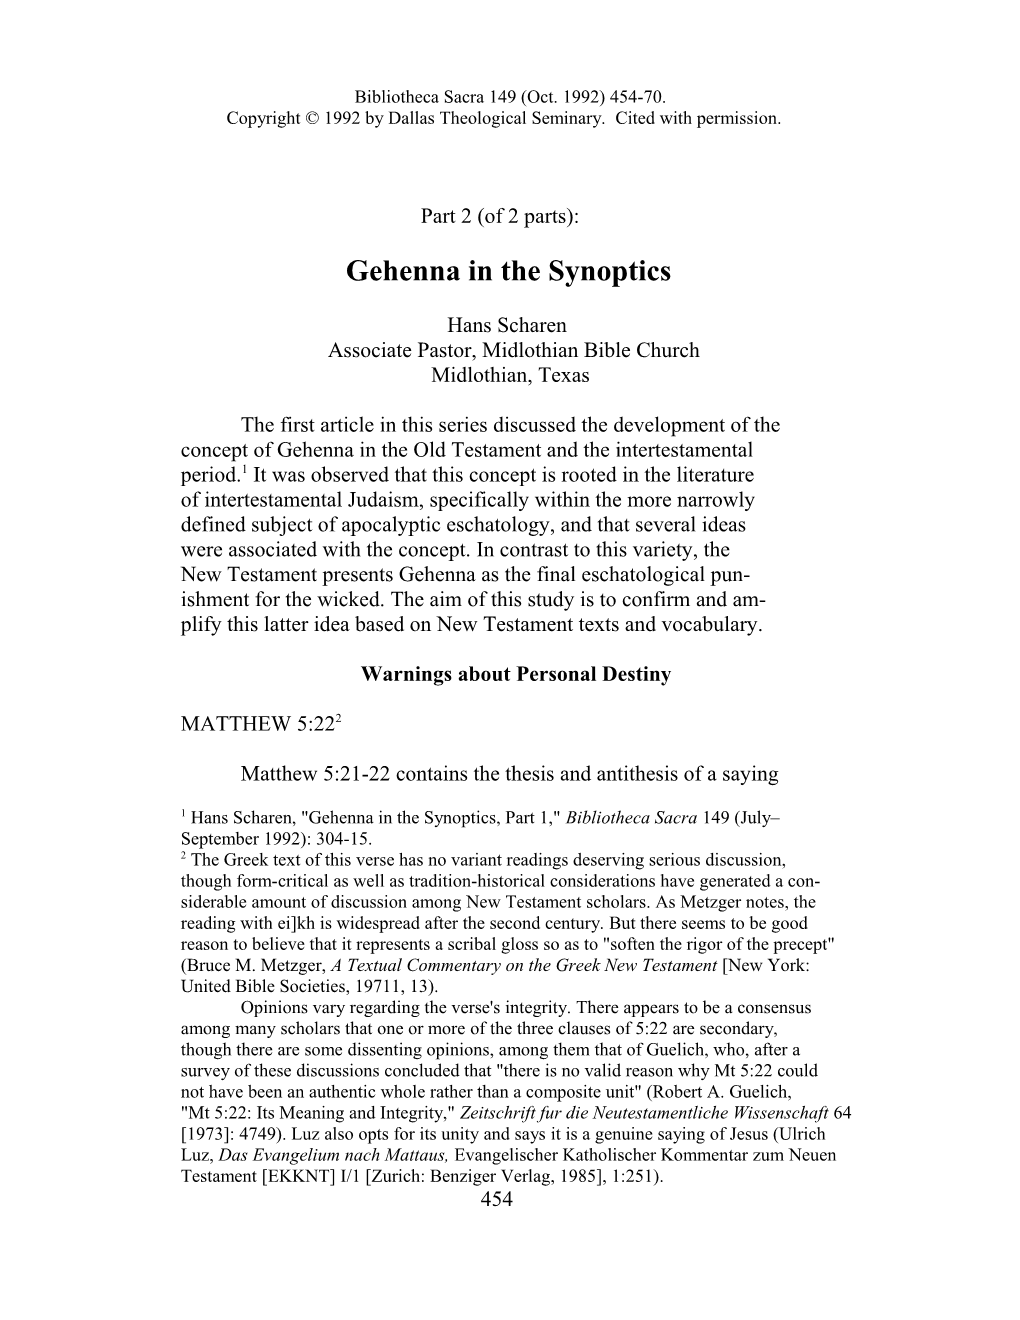 Gehenna in the Synoptics: Pt. 2